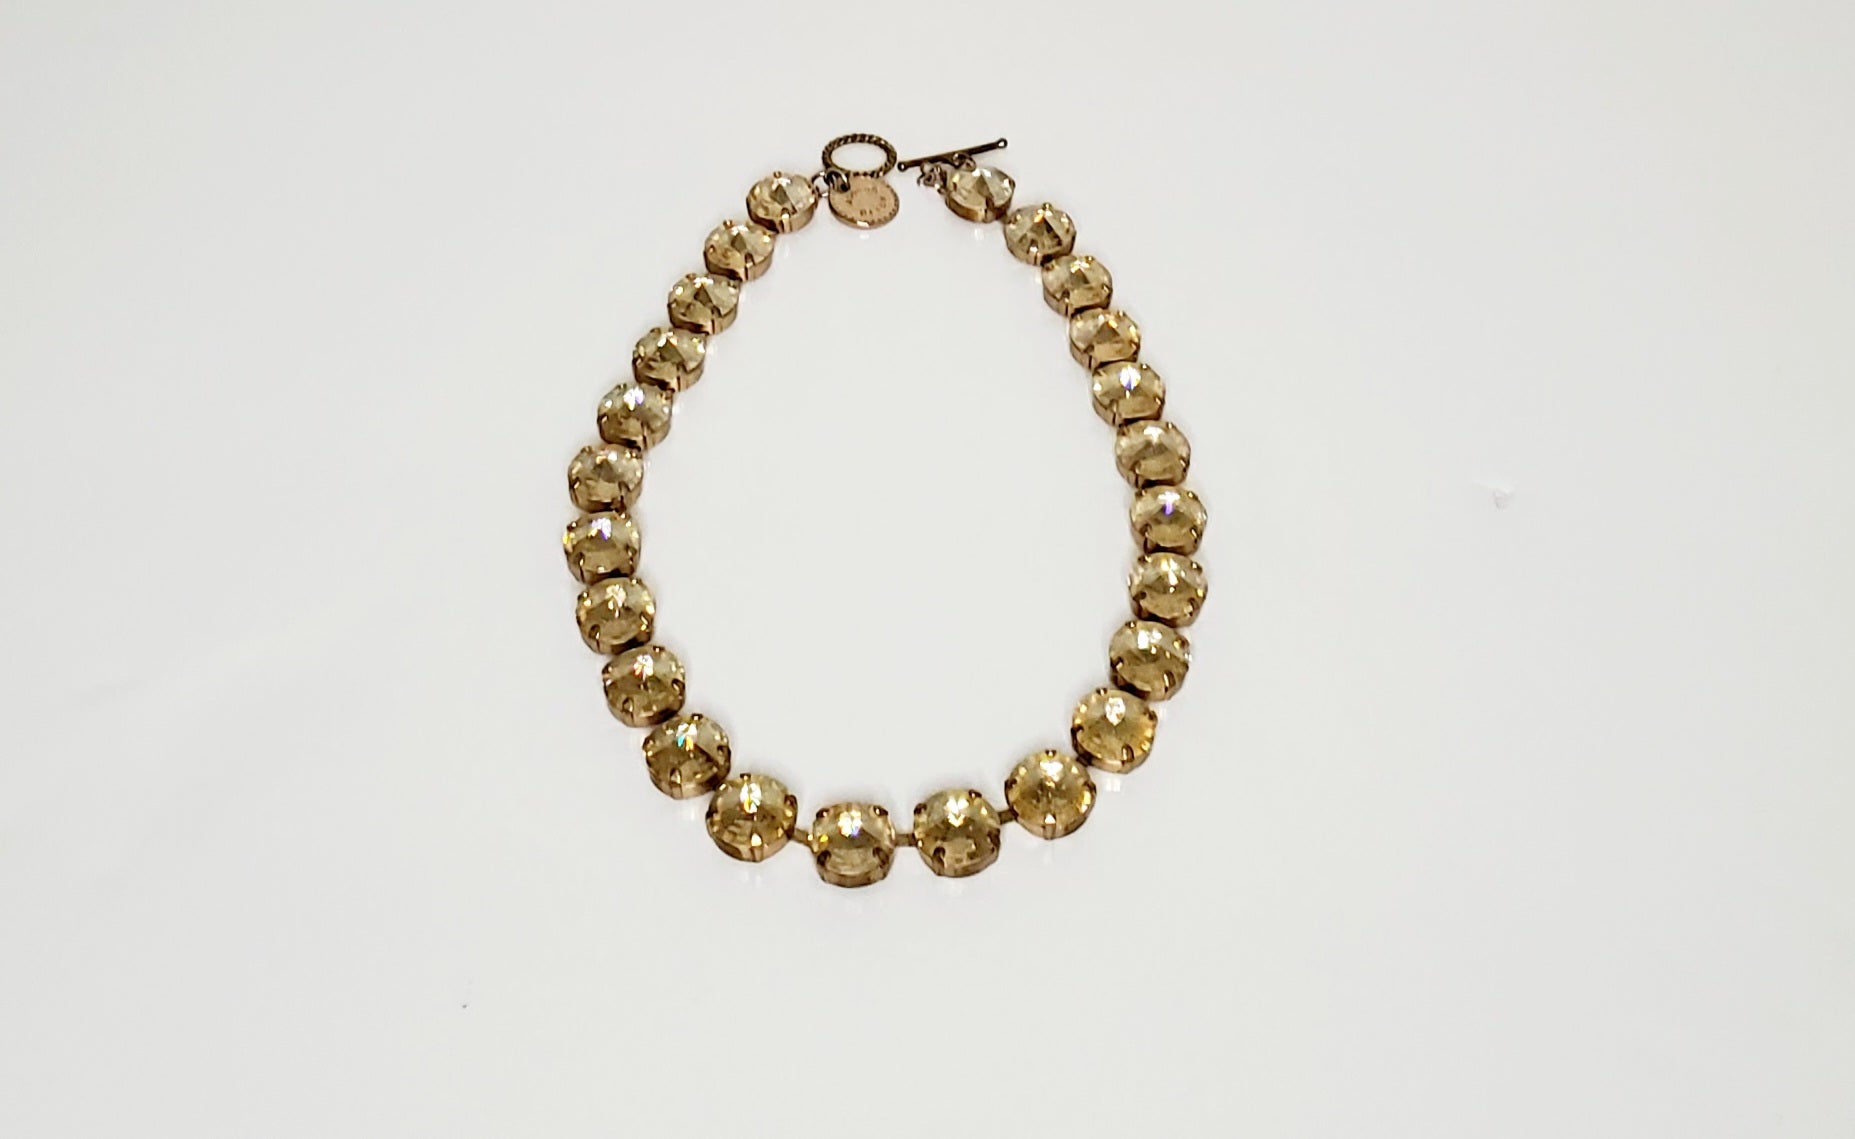 Necklace Rebekah Price 12-13361-317